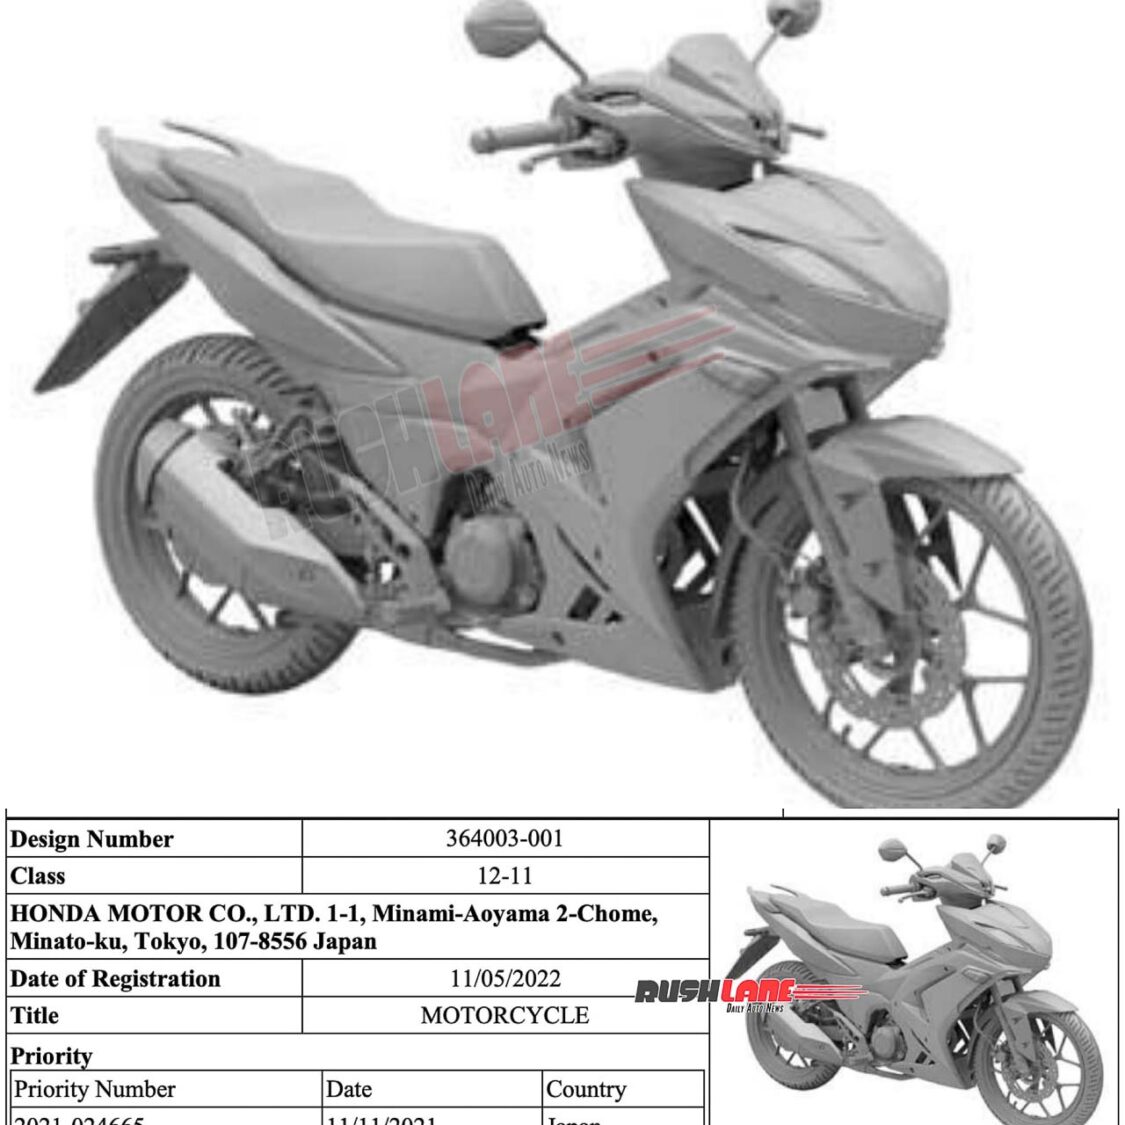 Honda Winner X patented in India